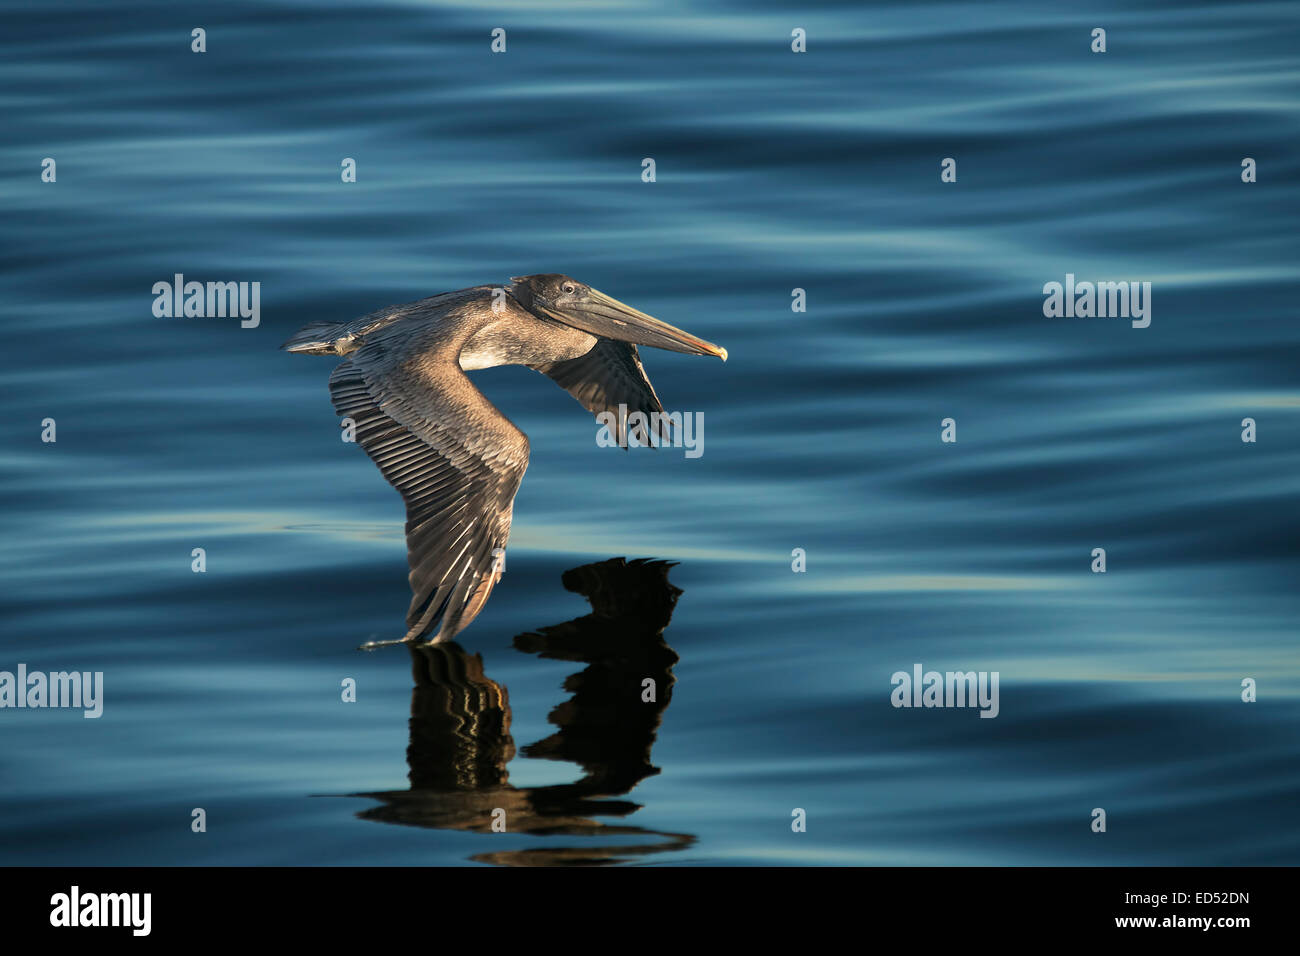 Juvenile Brown Pelican in flight over calm ocean waters of deep blue. Stock Photo